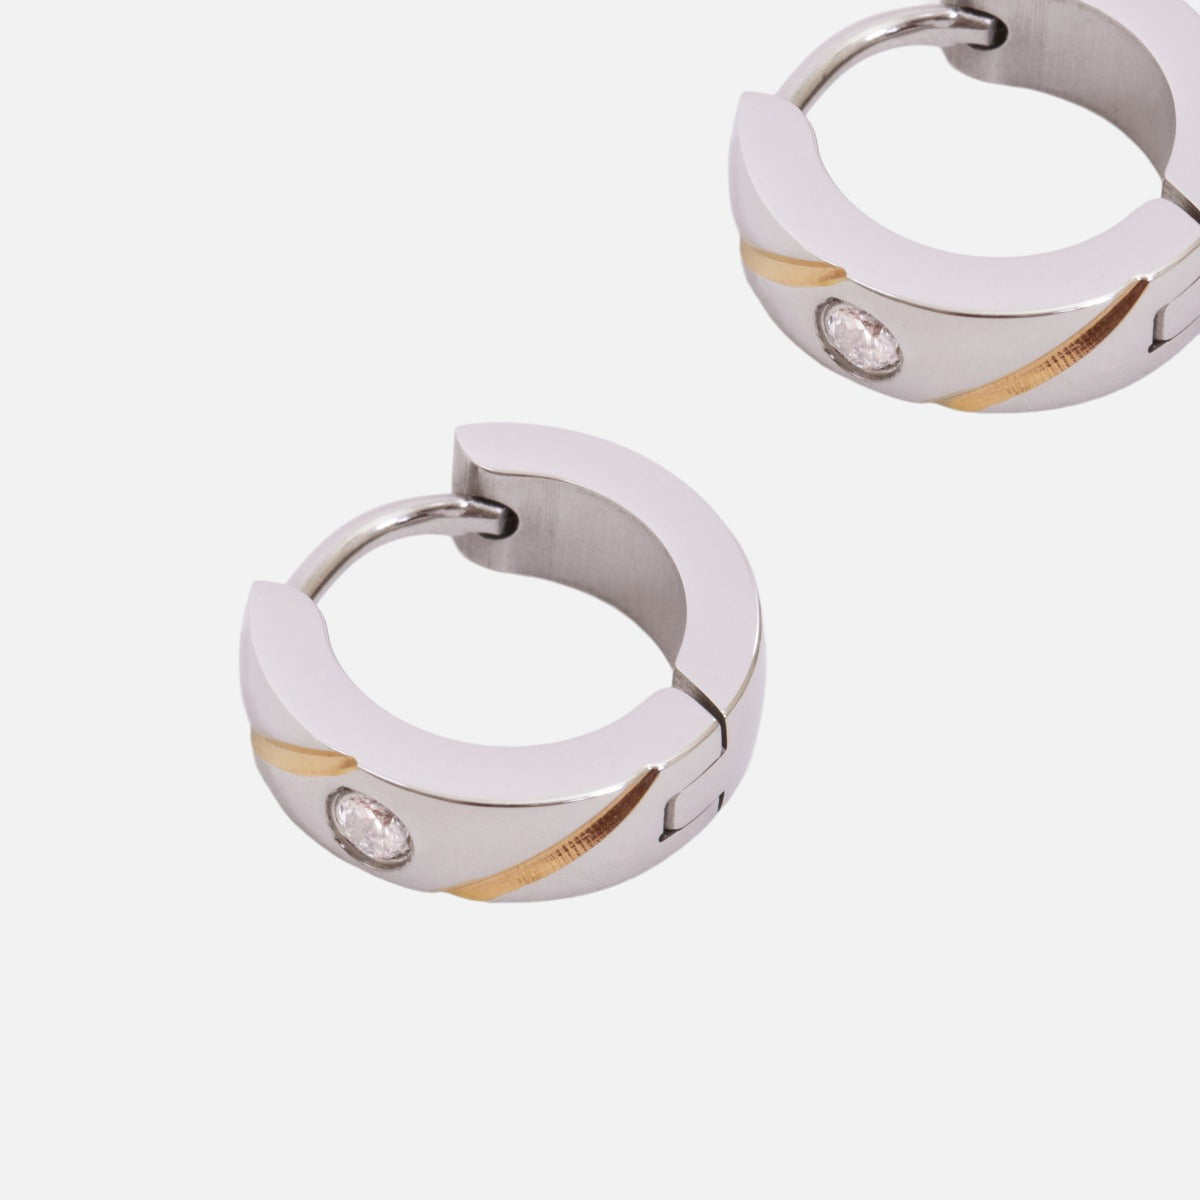 13mm silvered hoop earrings with cubic zirconia stones